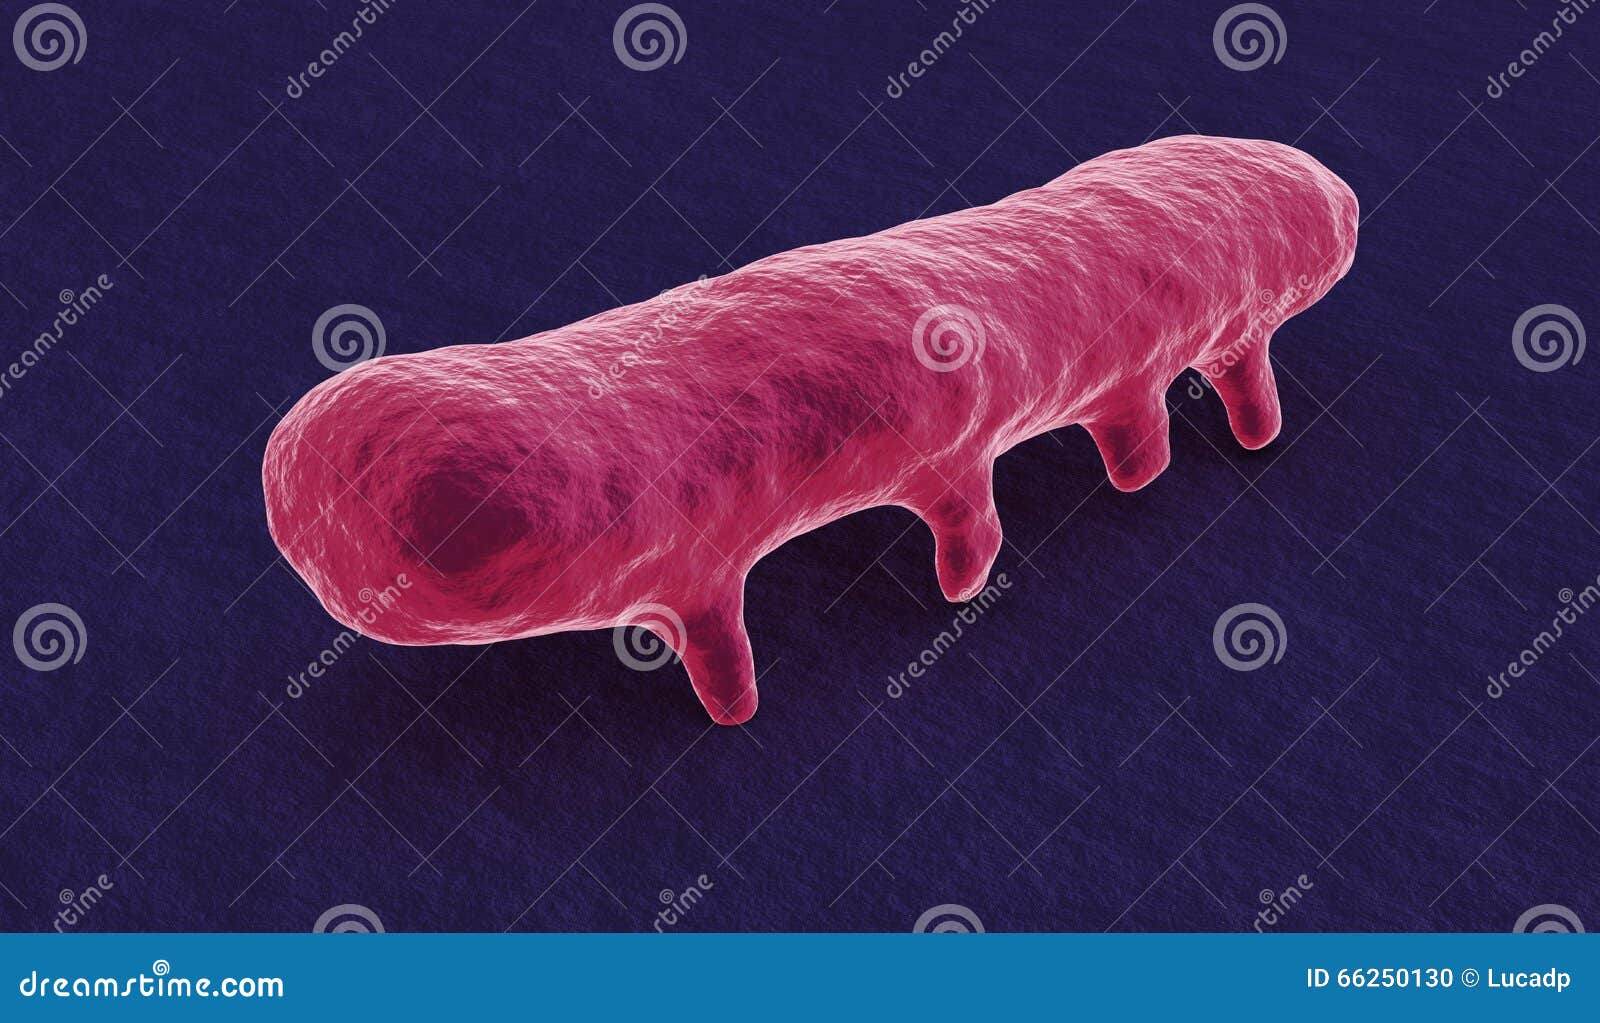 under the microscope, salmonella bacterium